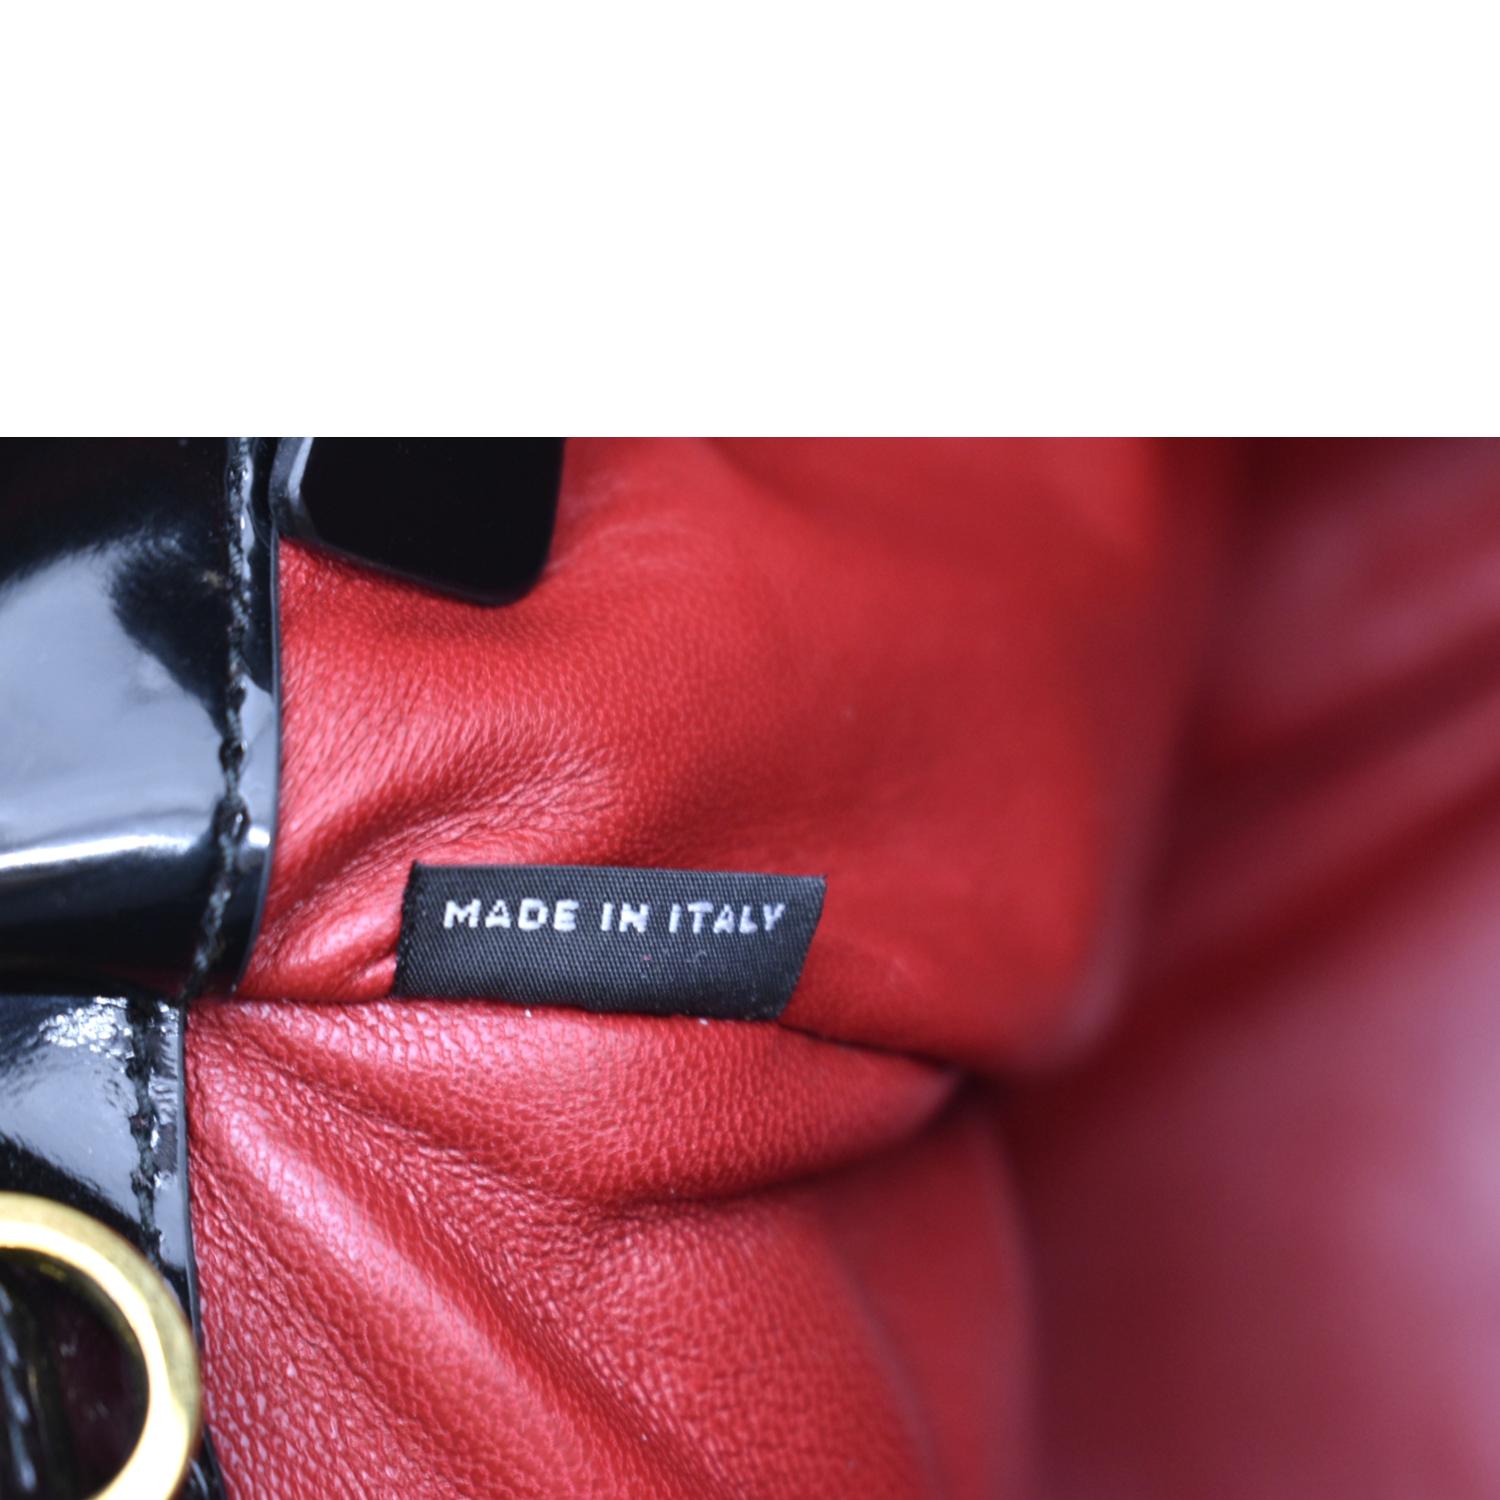 Prada Double Zip Patent Leather Shoulder Bag Black